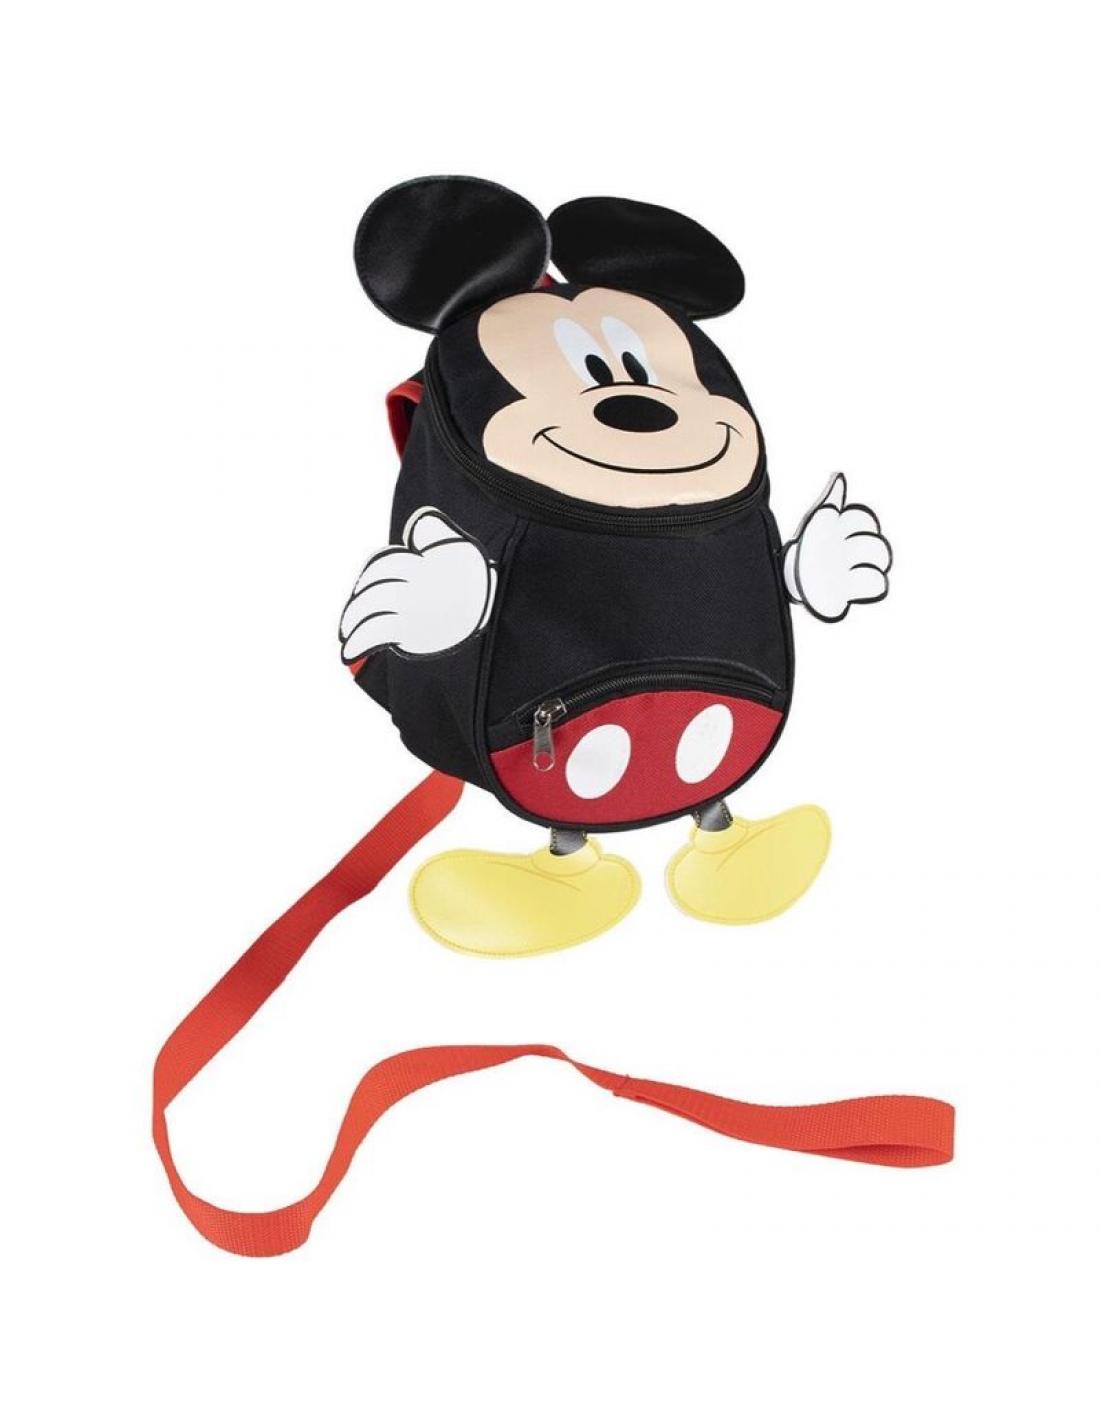 Mochila arnés de Mickey Disney - Envío GRATIS